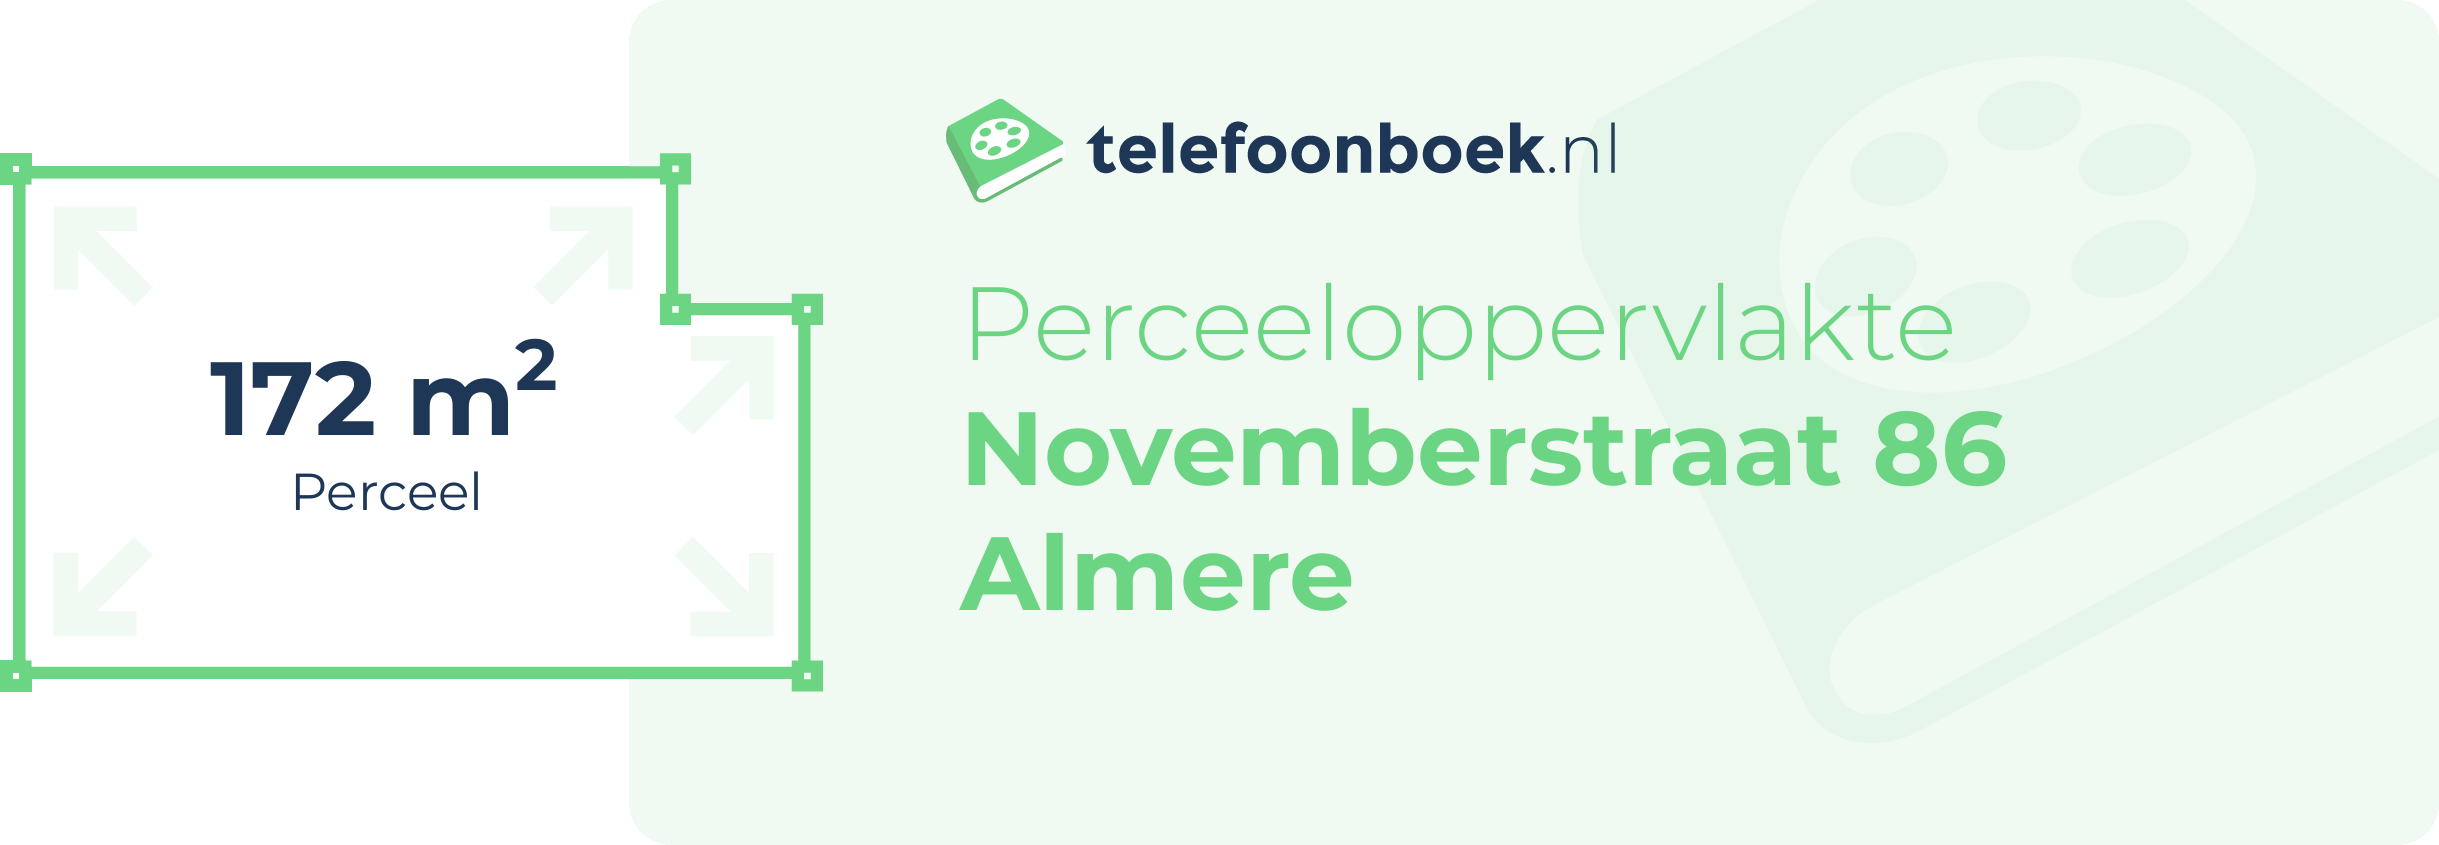 Perceeloppervlakte Novemberstraat 86 Almere